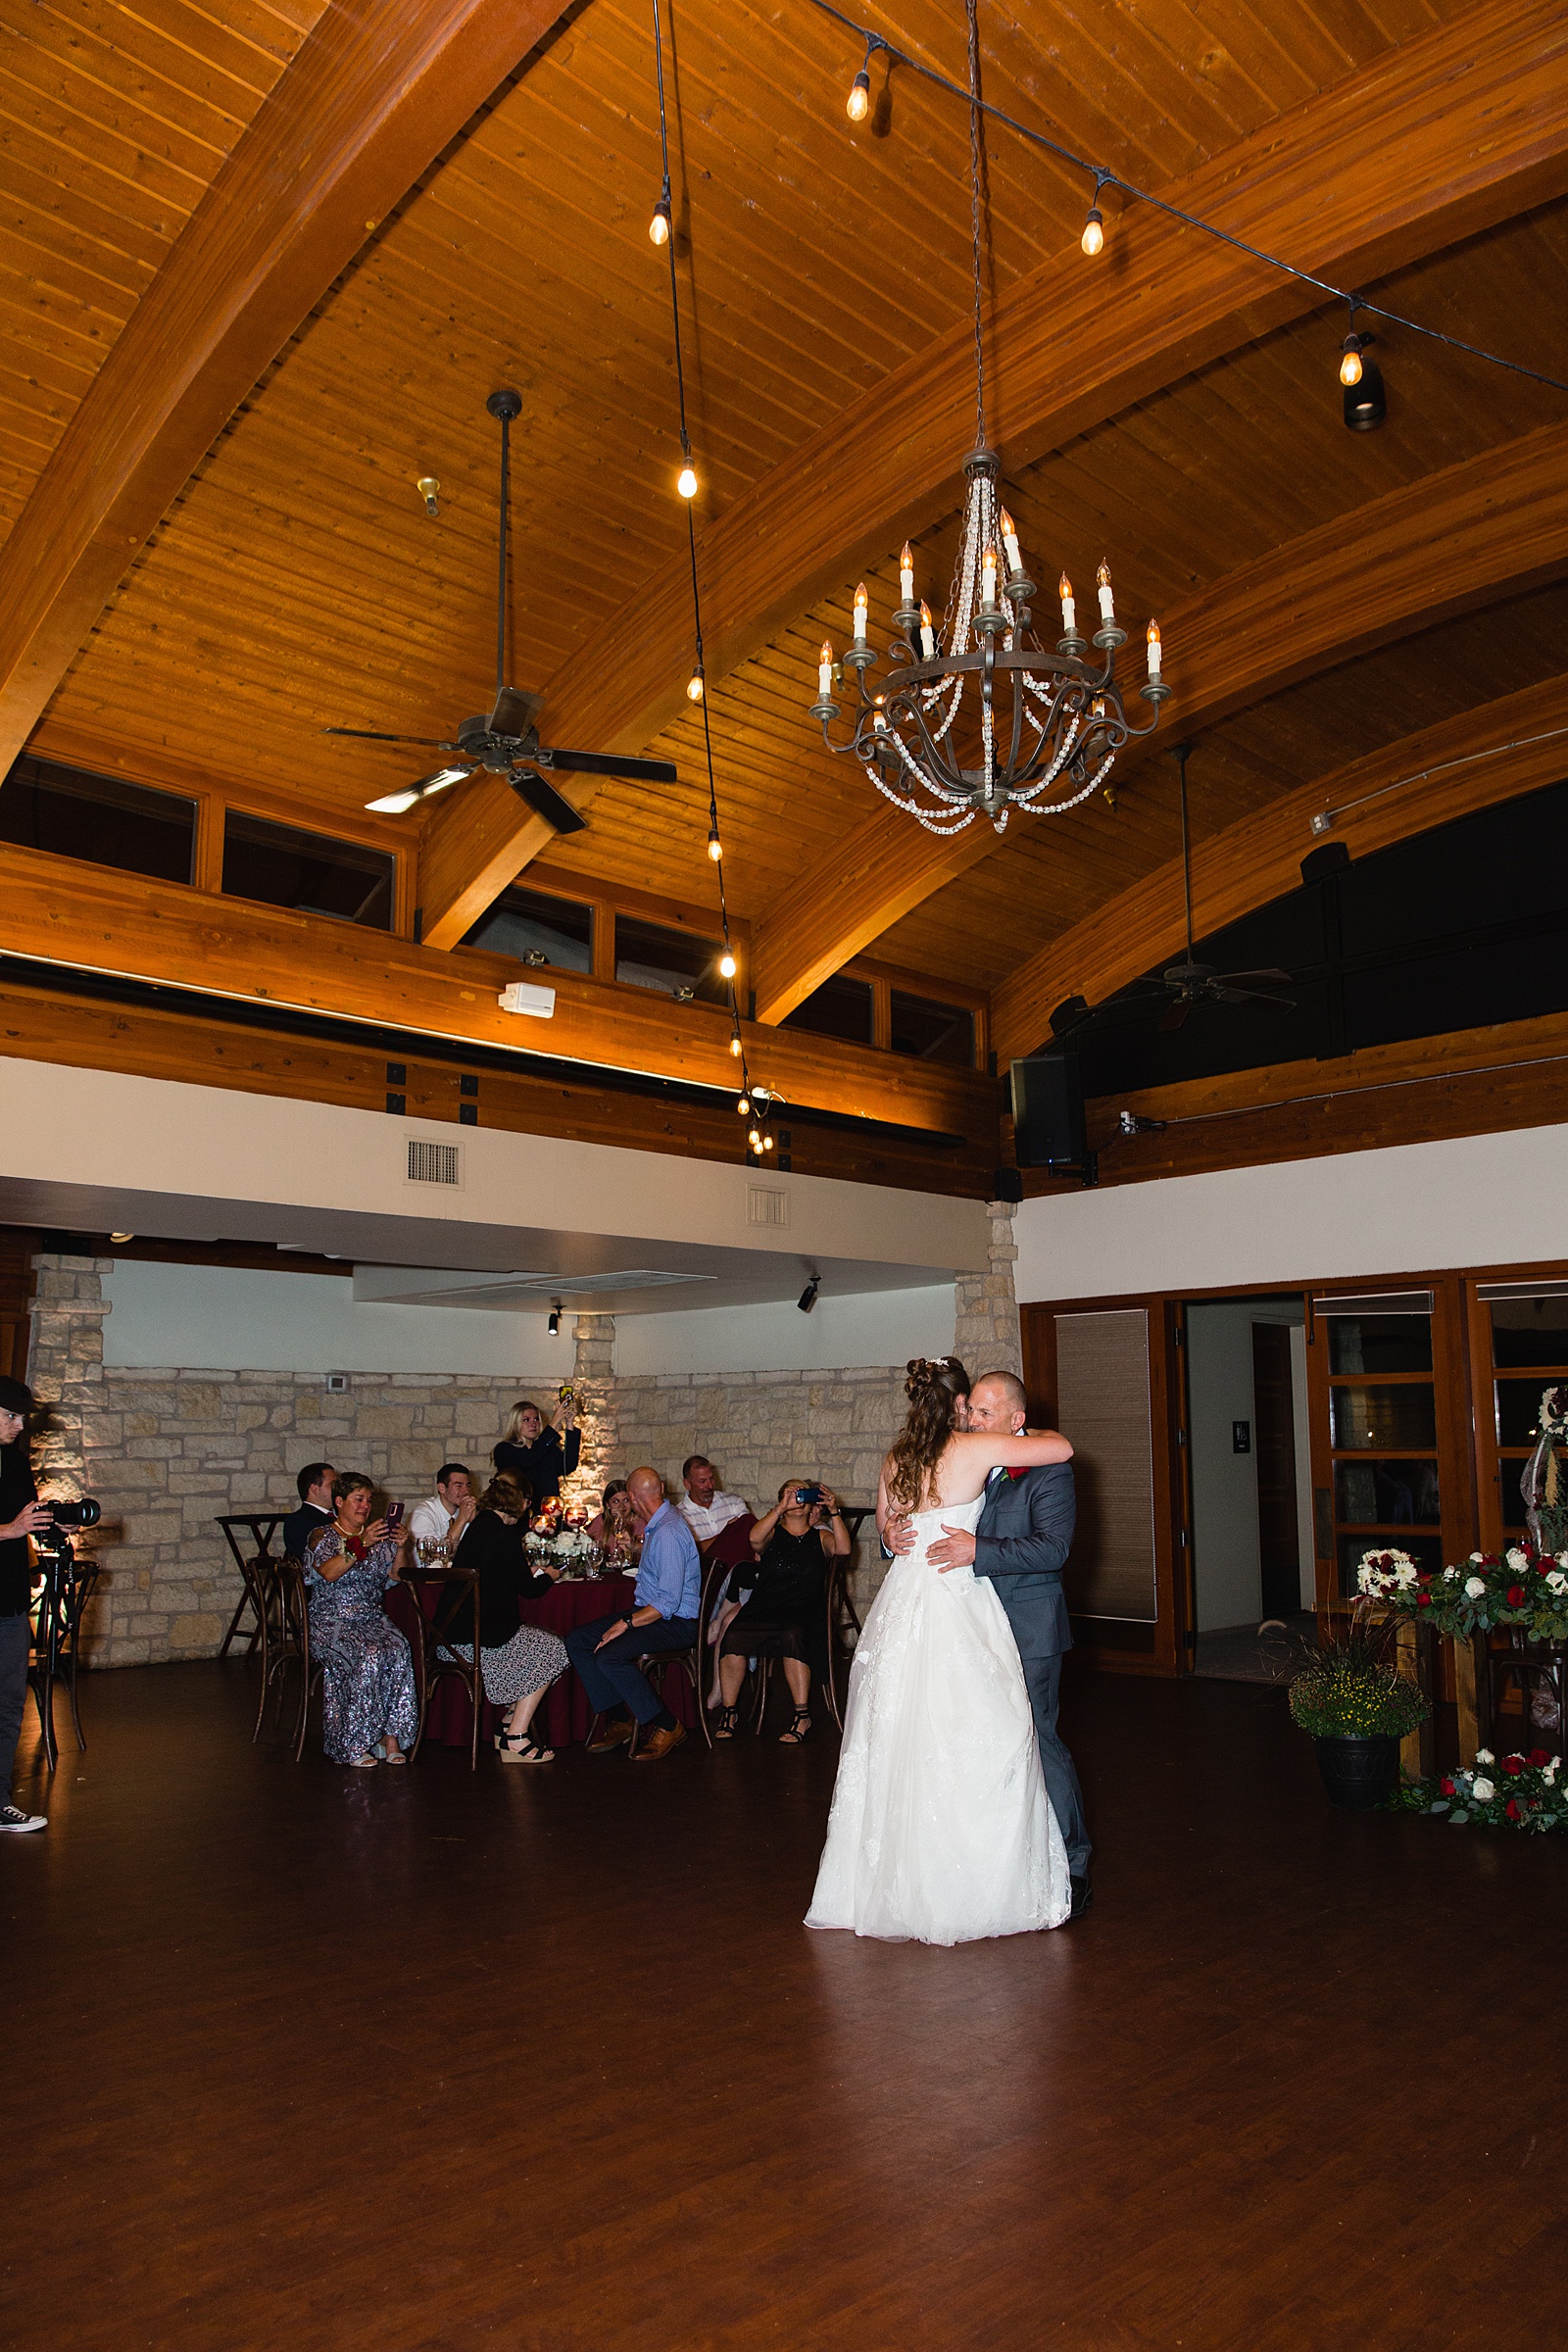 Parent dance at their Ocotillo Oasis wedding reception by Arizona wedding photographer PMA Photography.